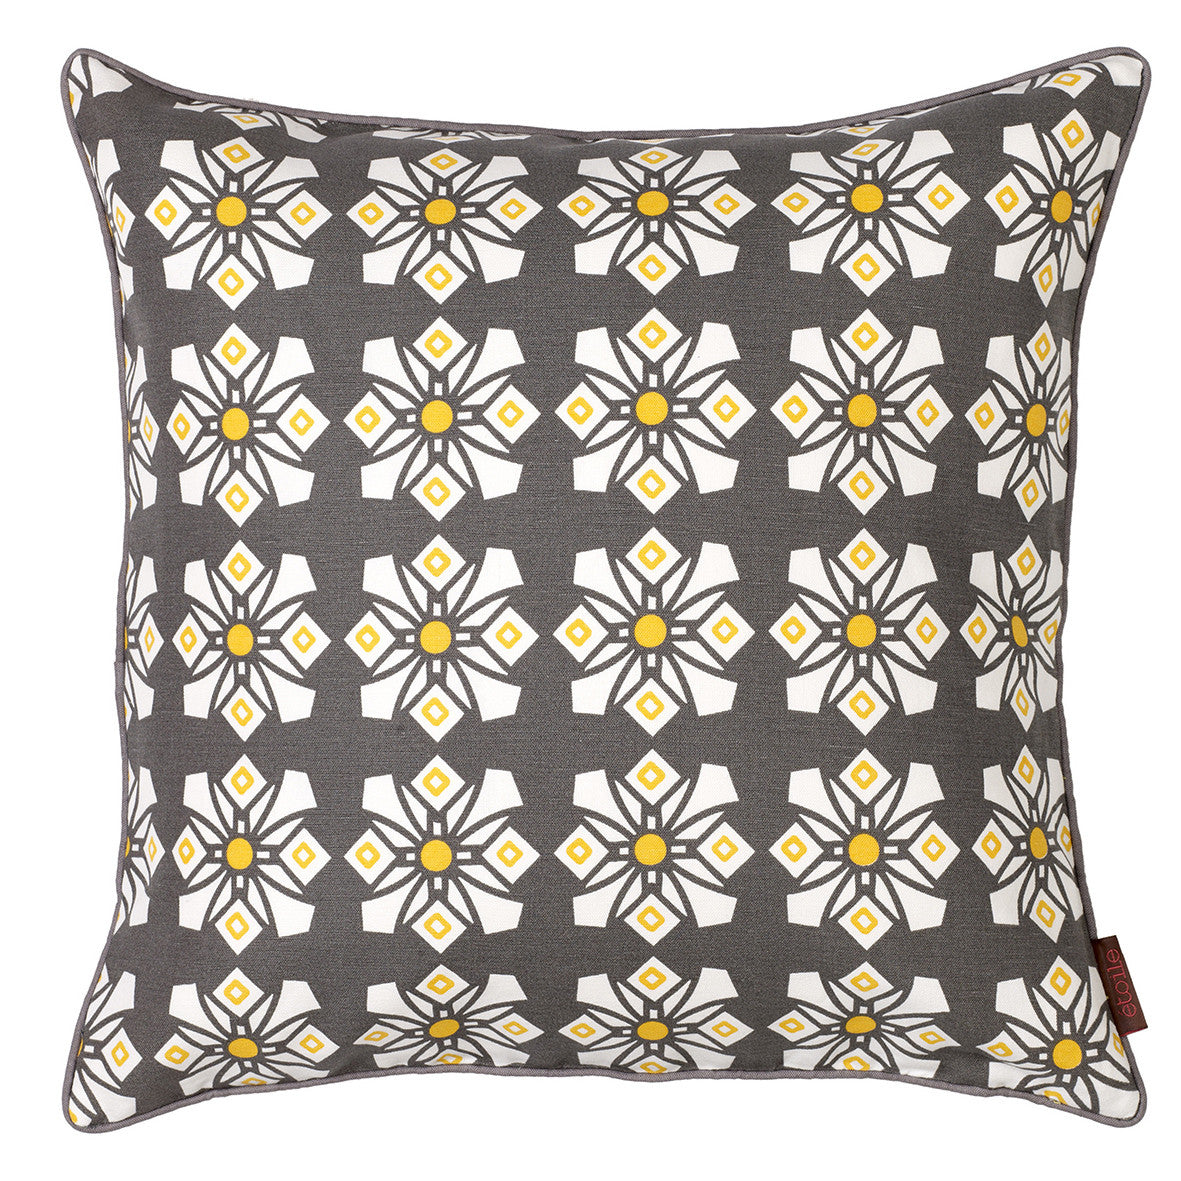 Dorothy Geometric Pattern Cotton Linen Decorative Throw Pillow in Stone Grey 45x45cm (18x18")